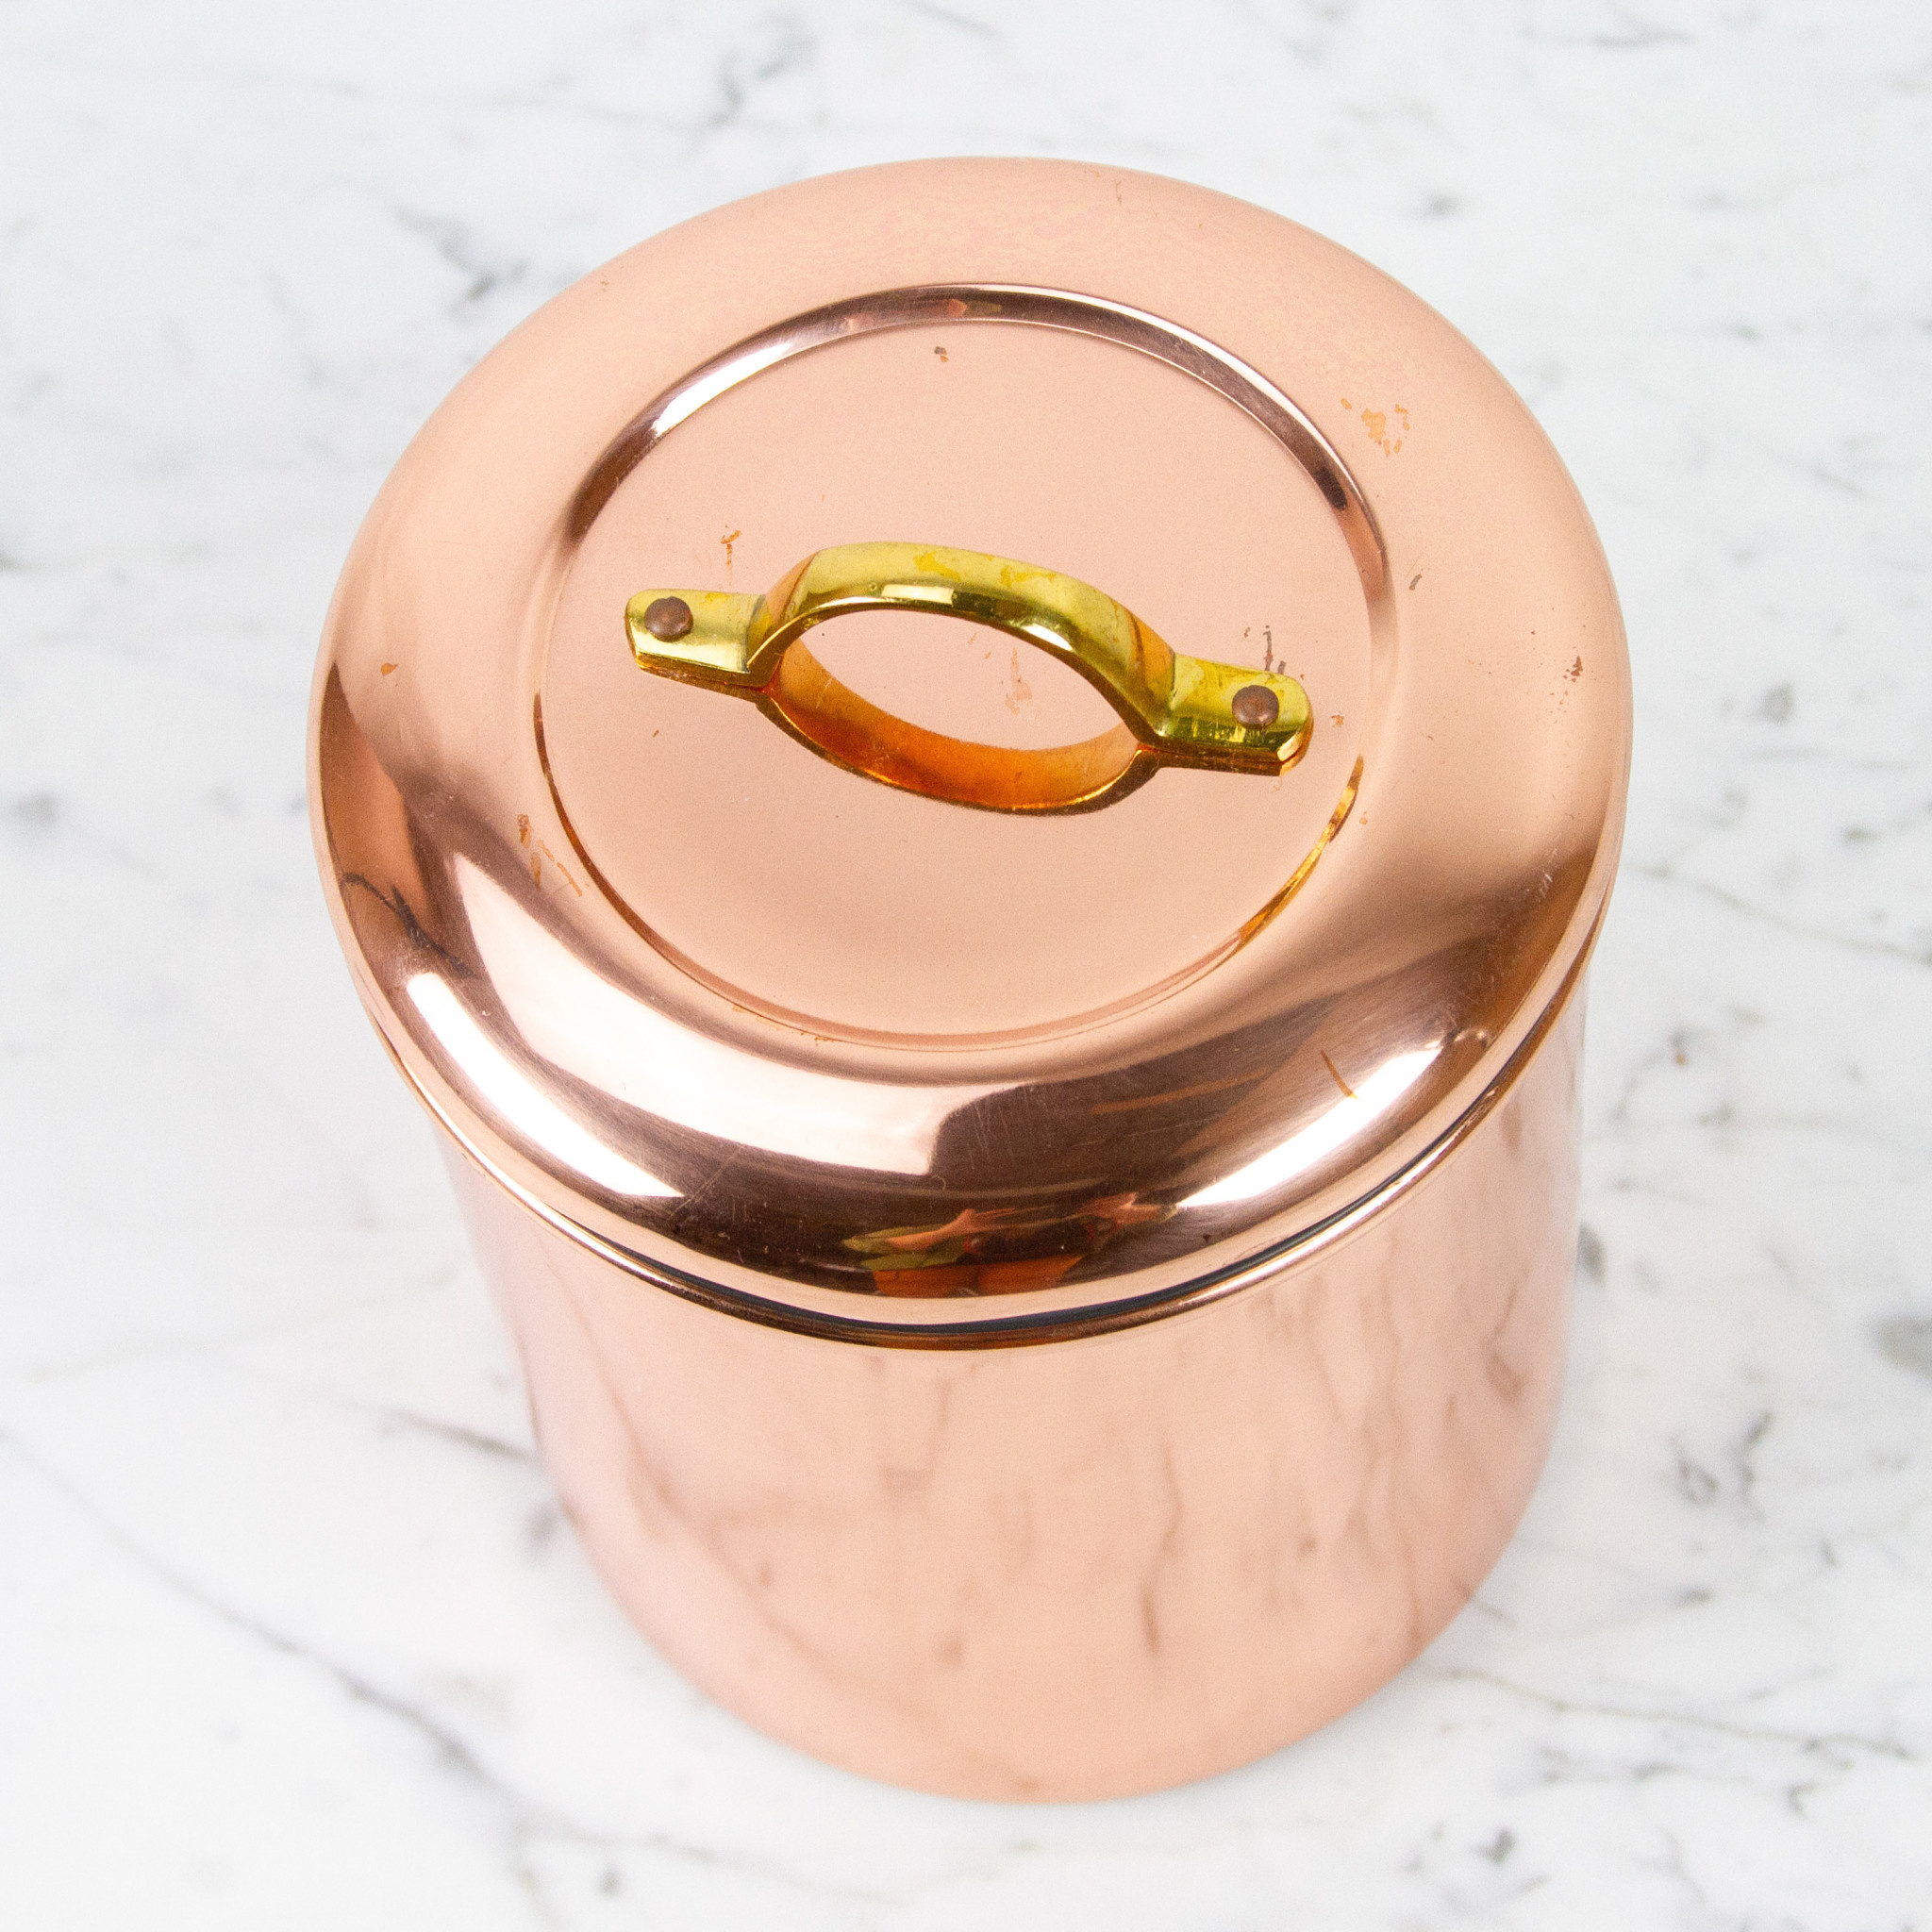 Copper Storage Canister Brass Handle - Medium - 6.5"